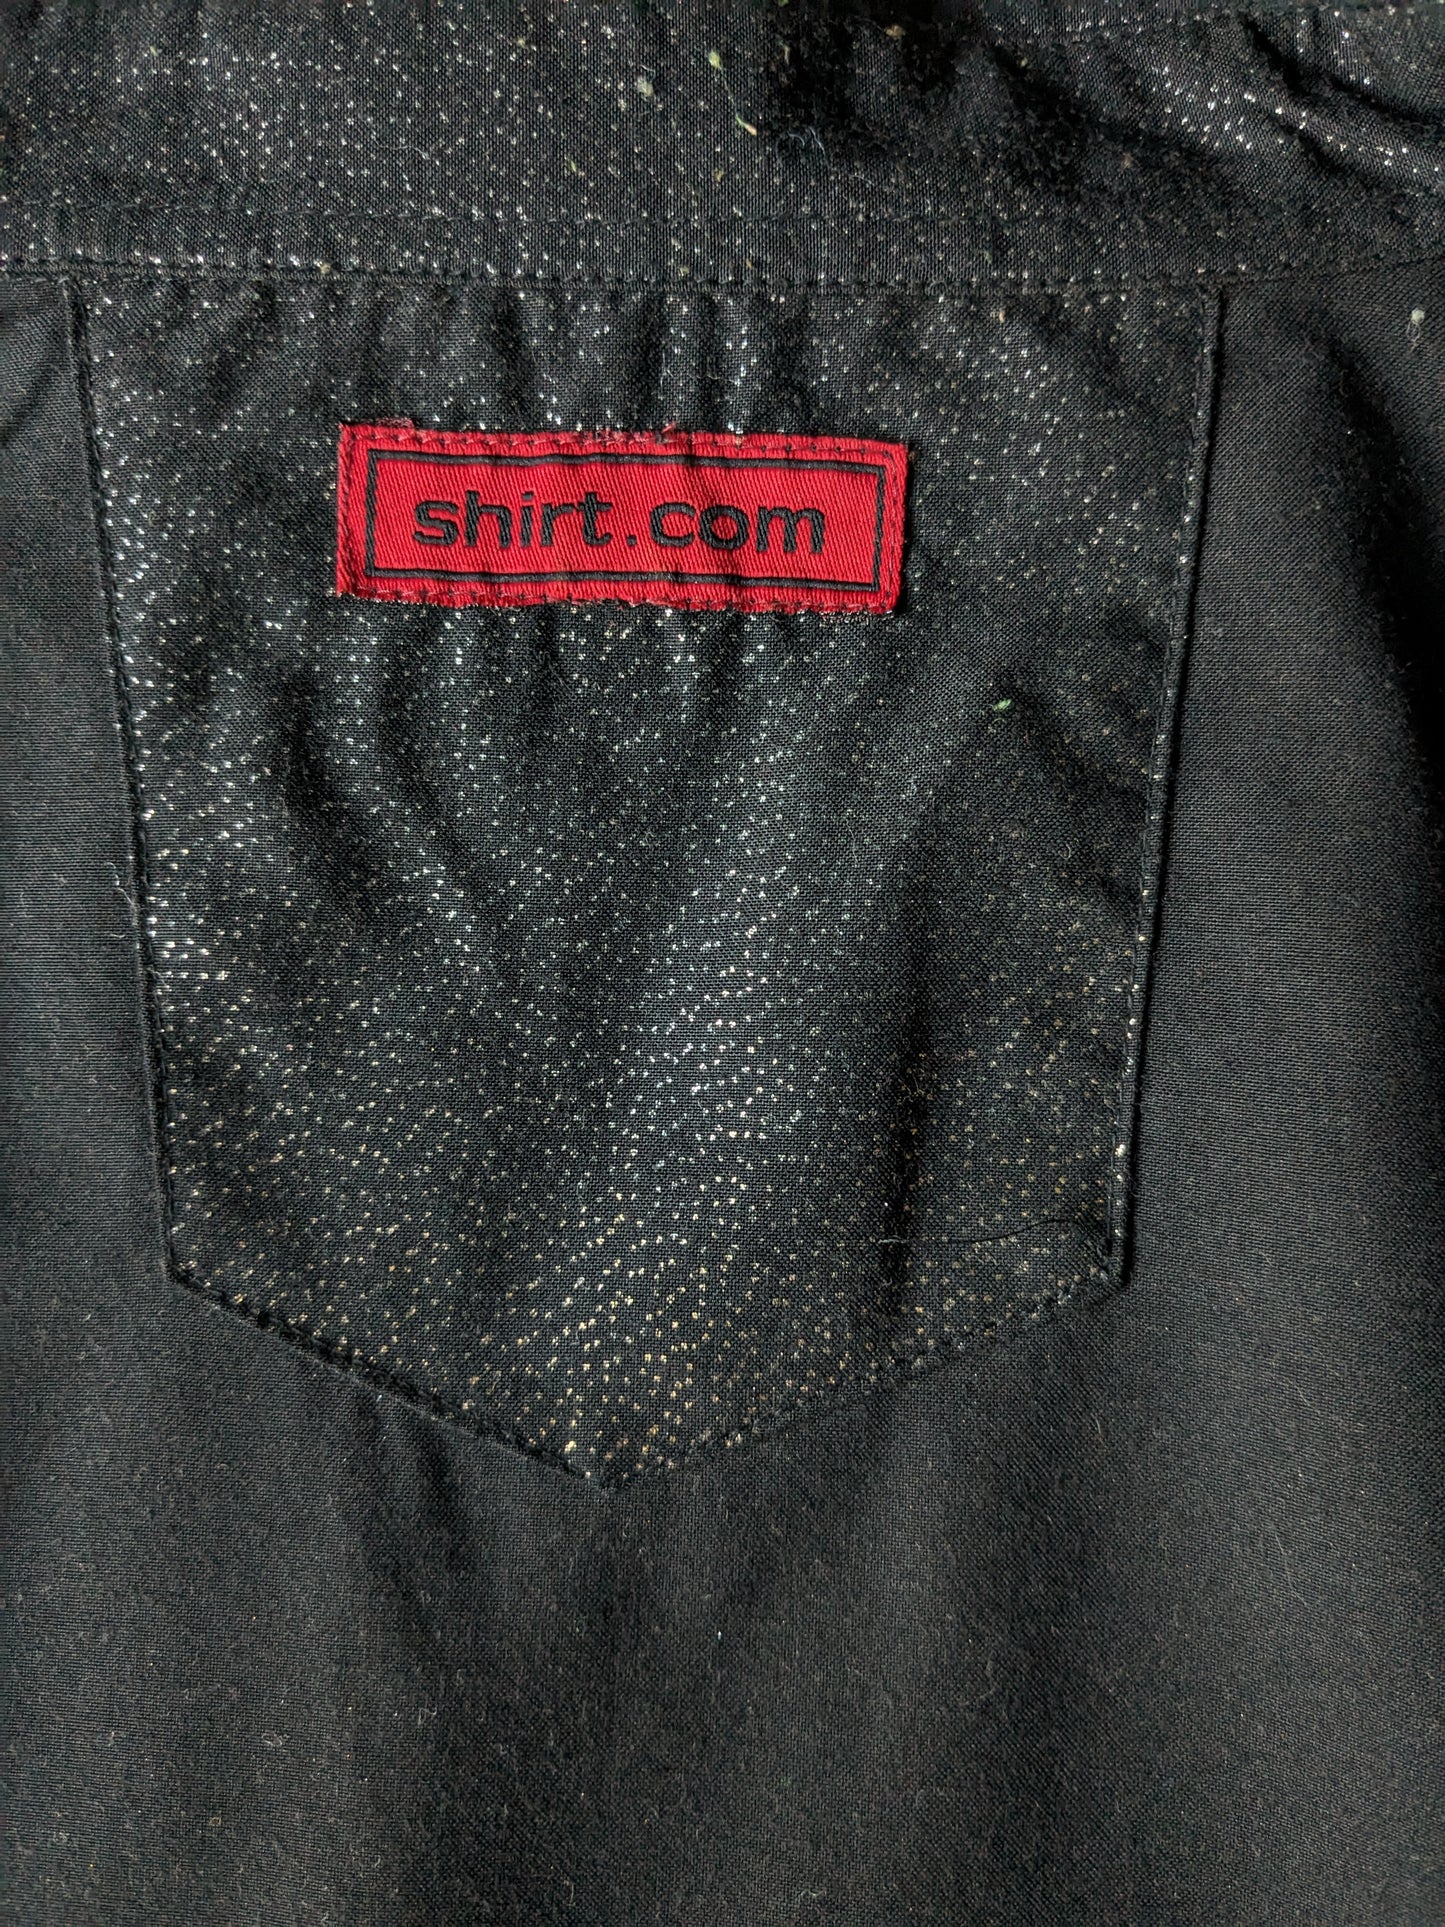 Shirt.com shirt. Black gold -colored dotted. Nice buttons. Size XL / XXL-2XL.